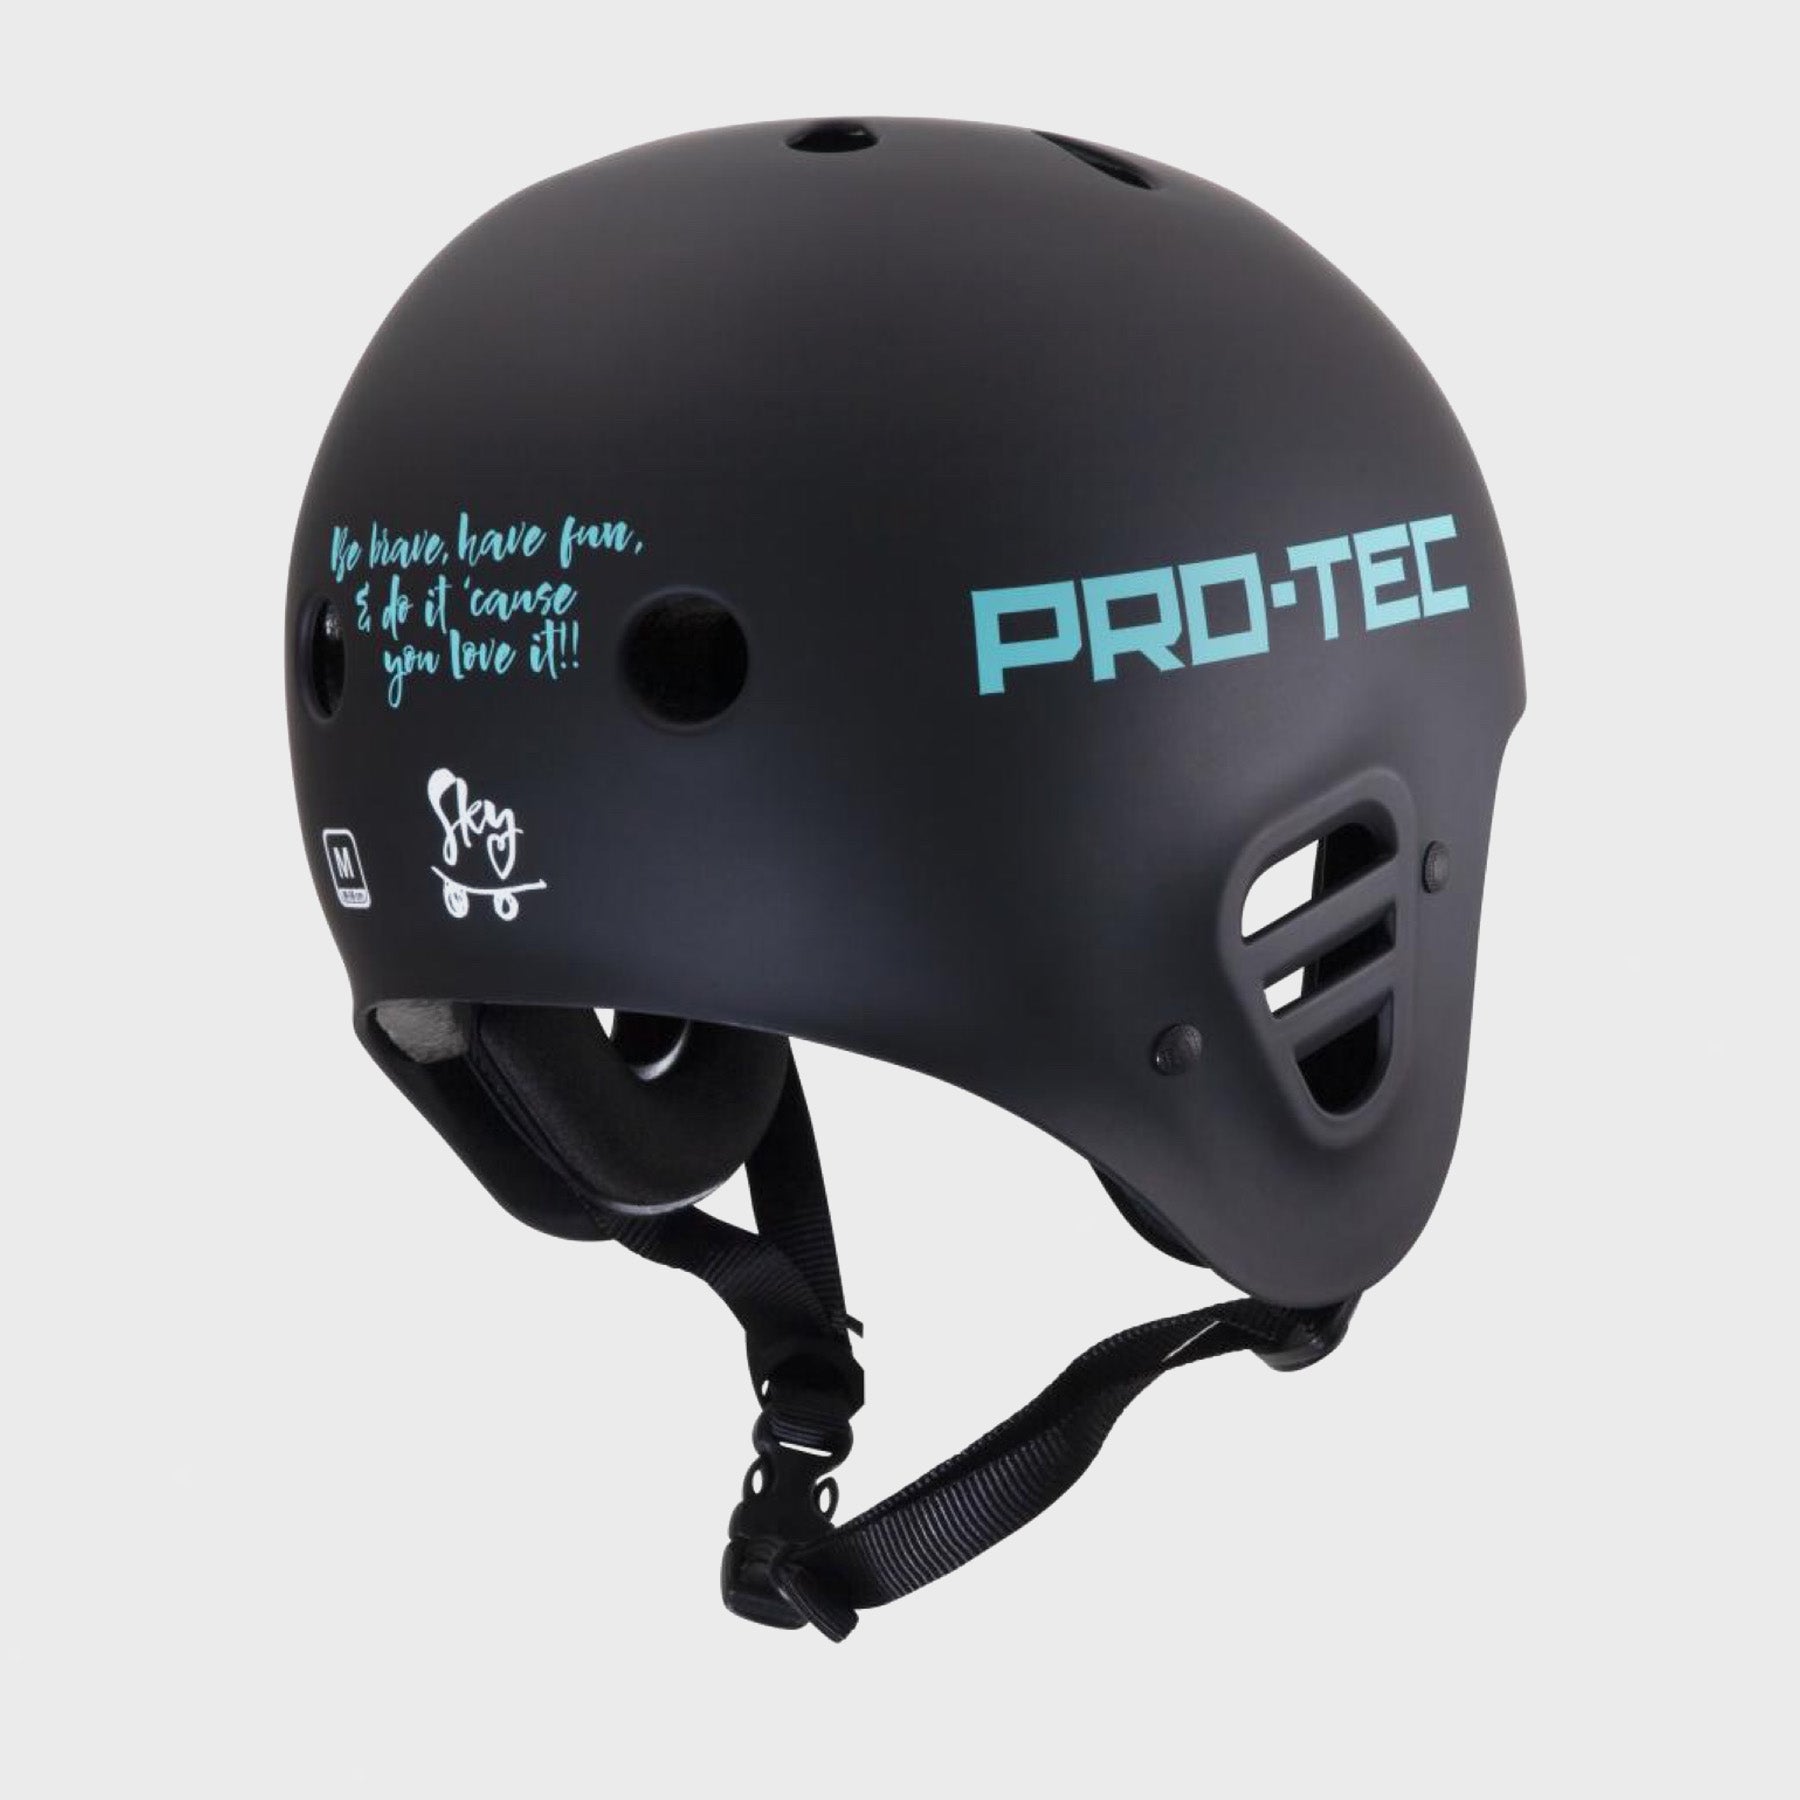 Pro-Tec - Full Cut Sky Brown Helmet - Black / Light Blue